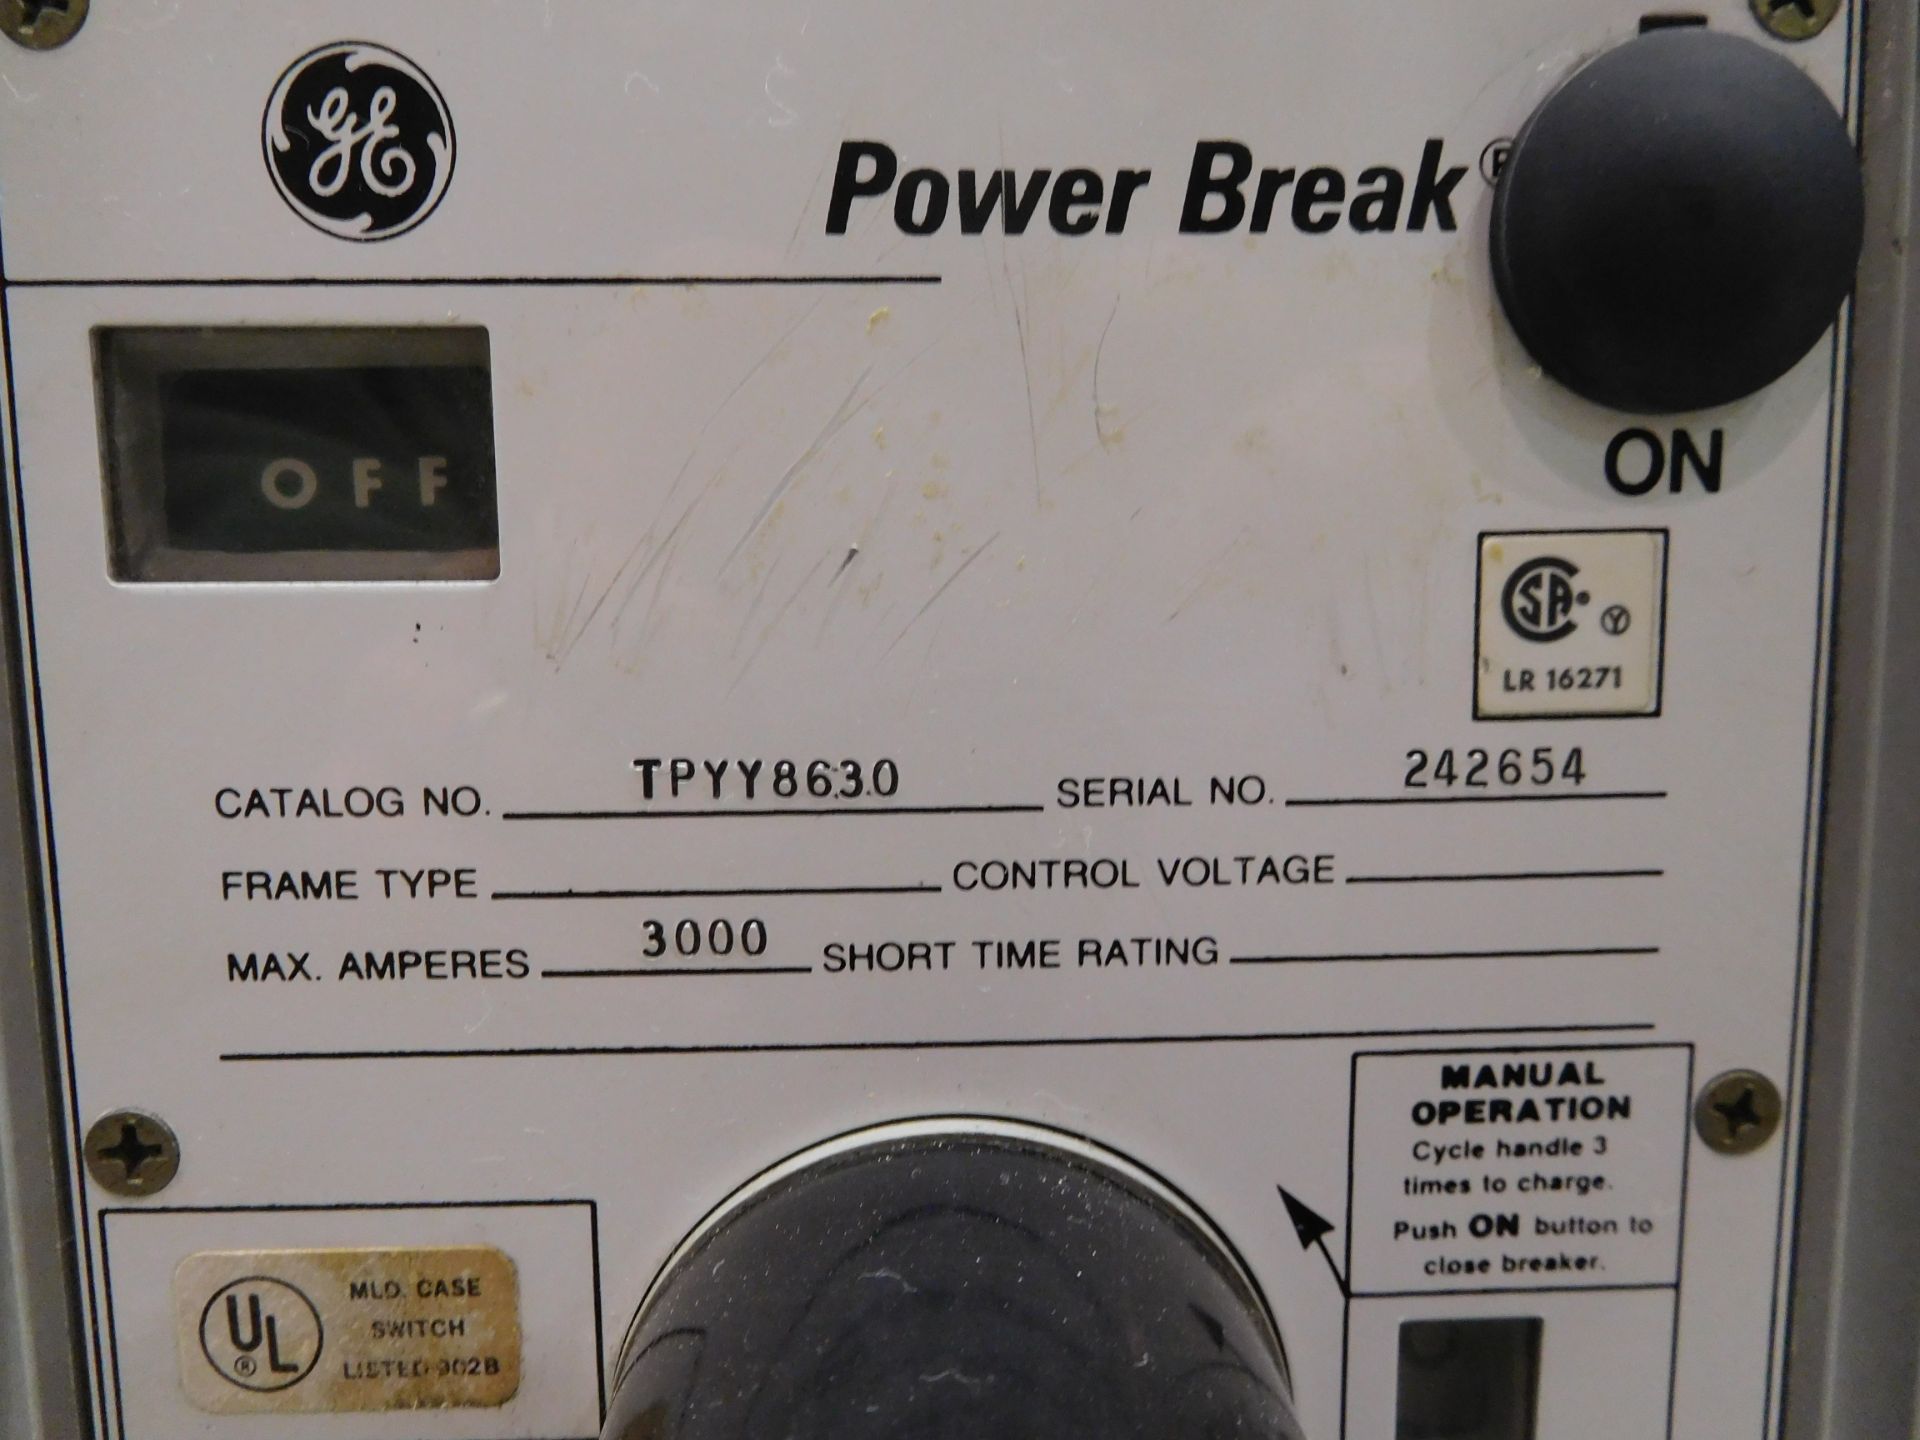 GE TPYY8630 Power Break 3000 Amp Circuit Breaker - Image 2 of 9